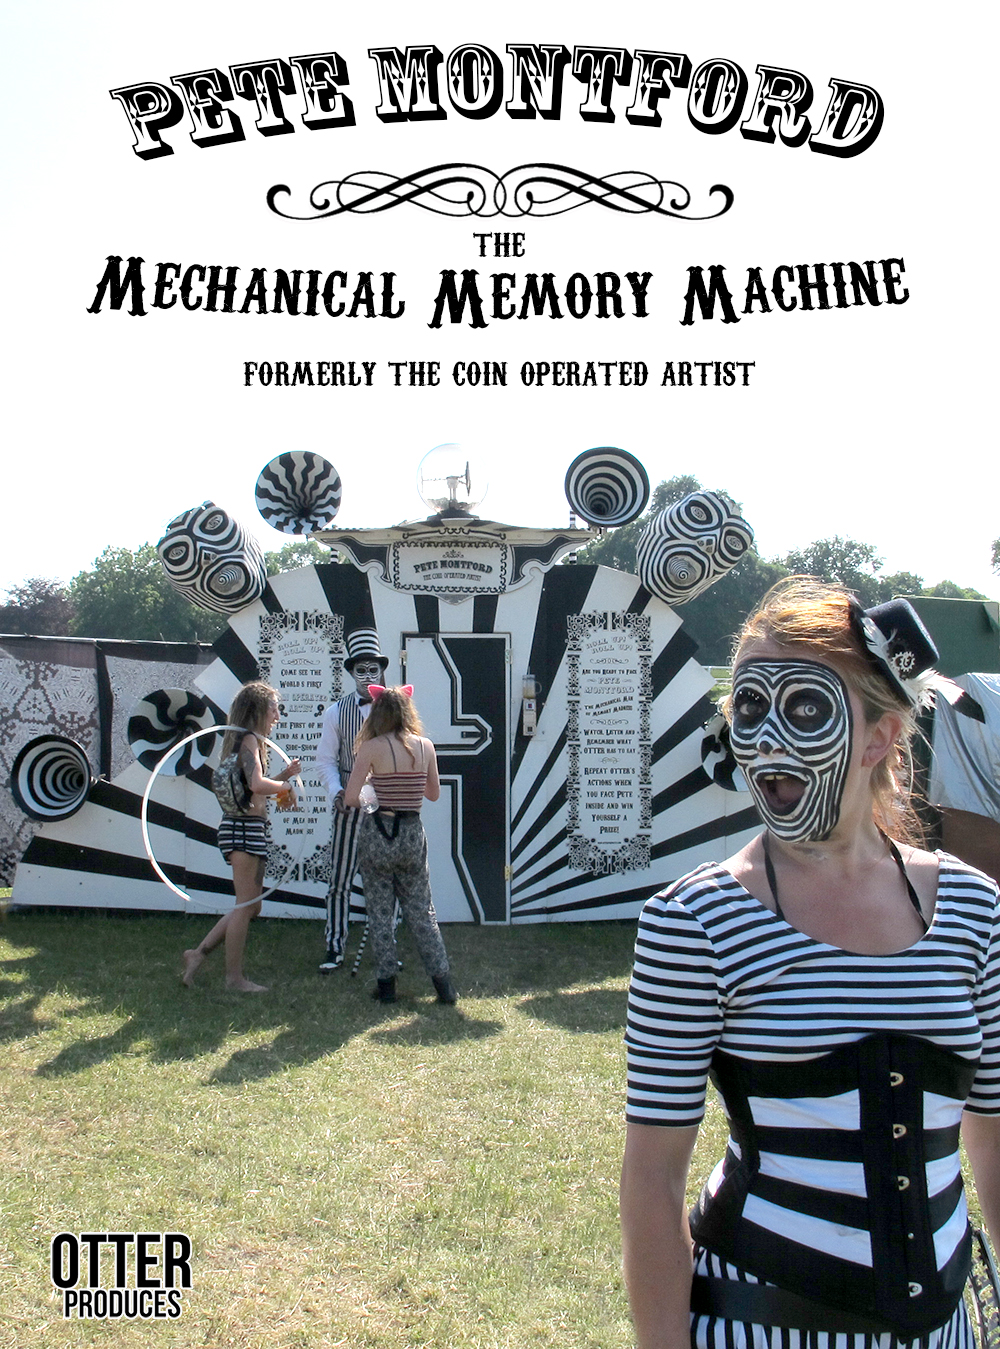 The Mechanical Memory Machine